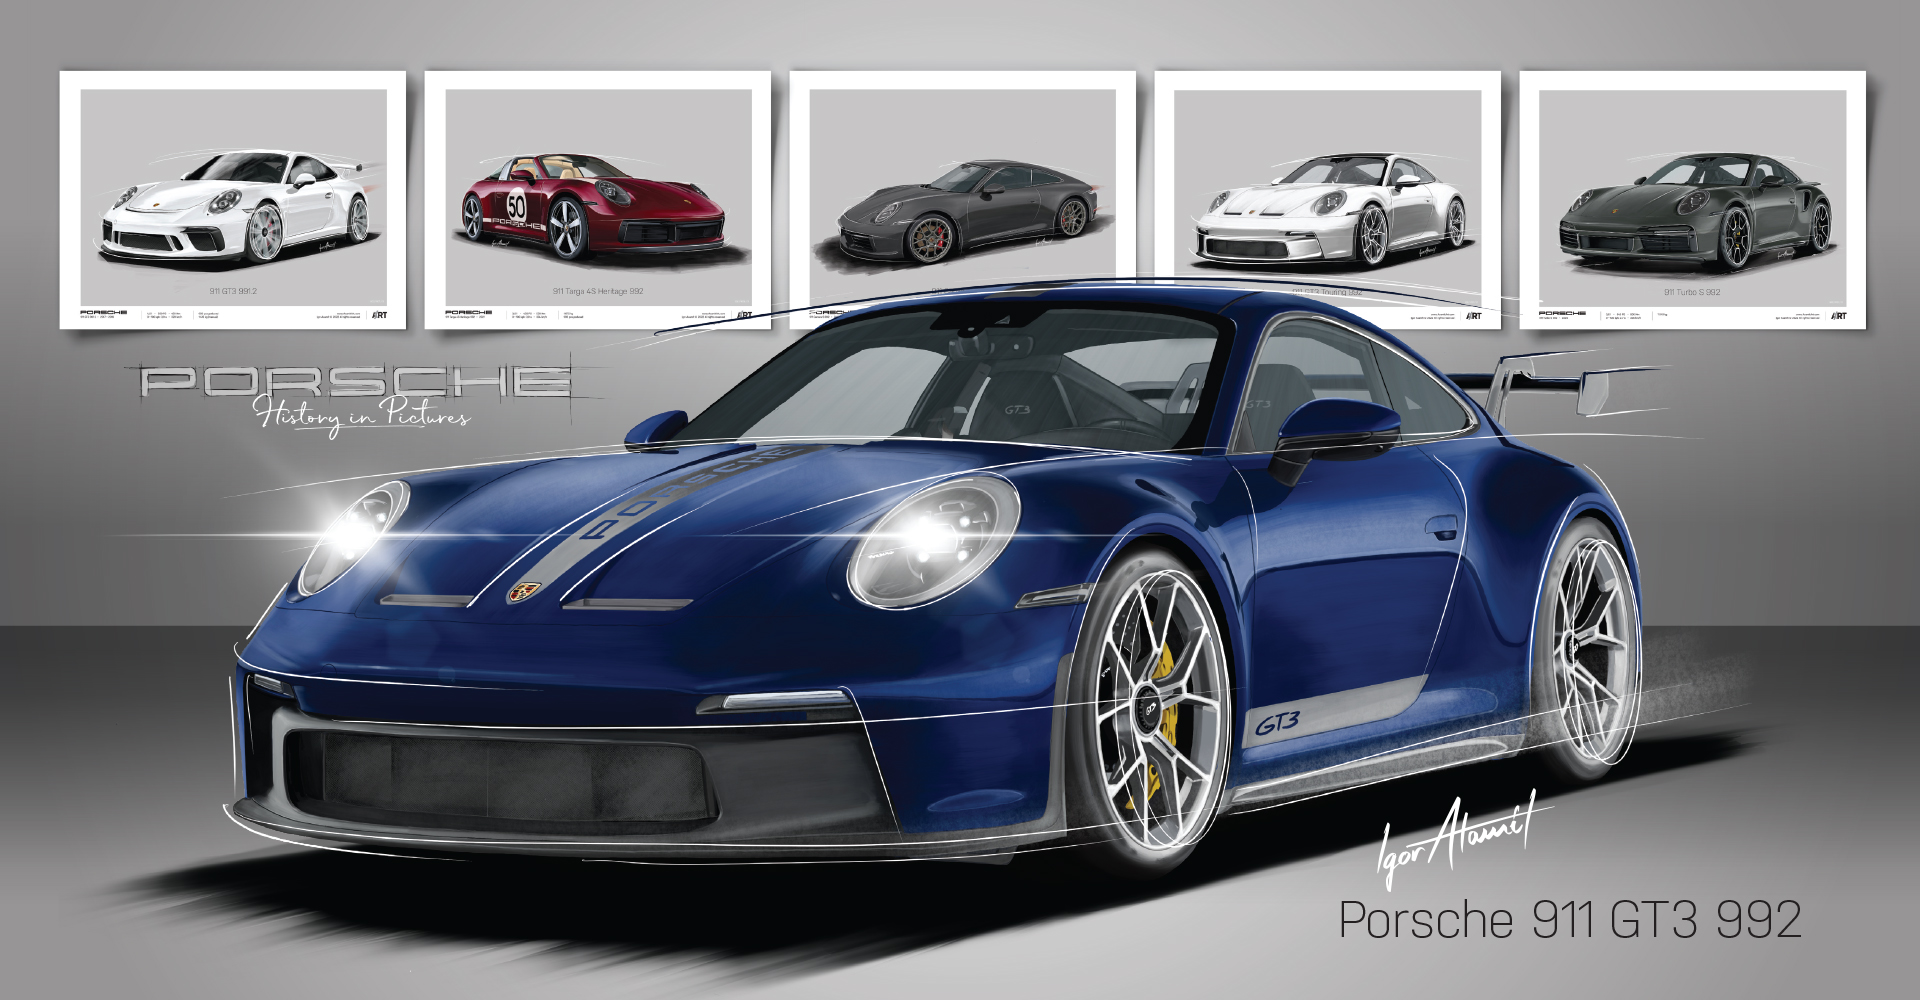 Porsche history in pictures